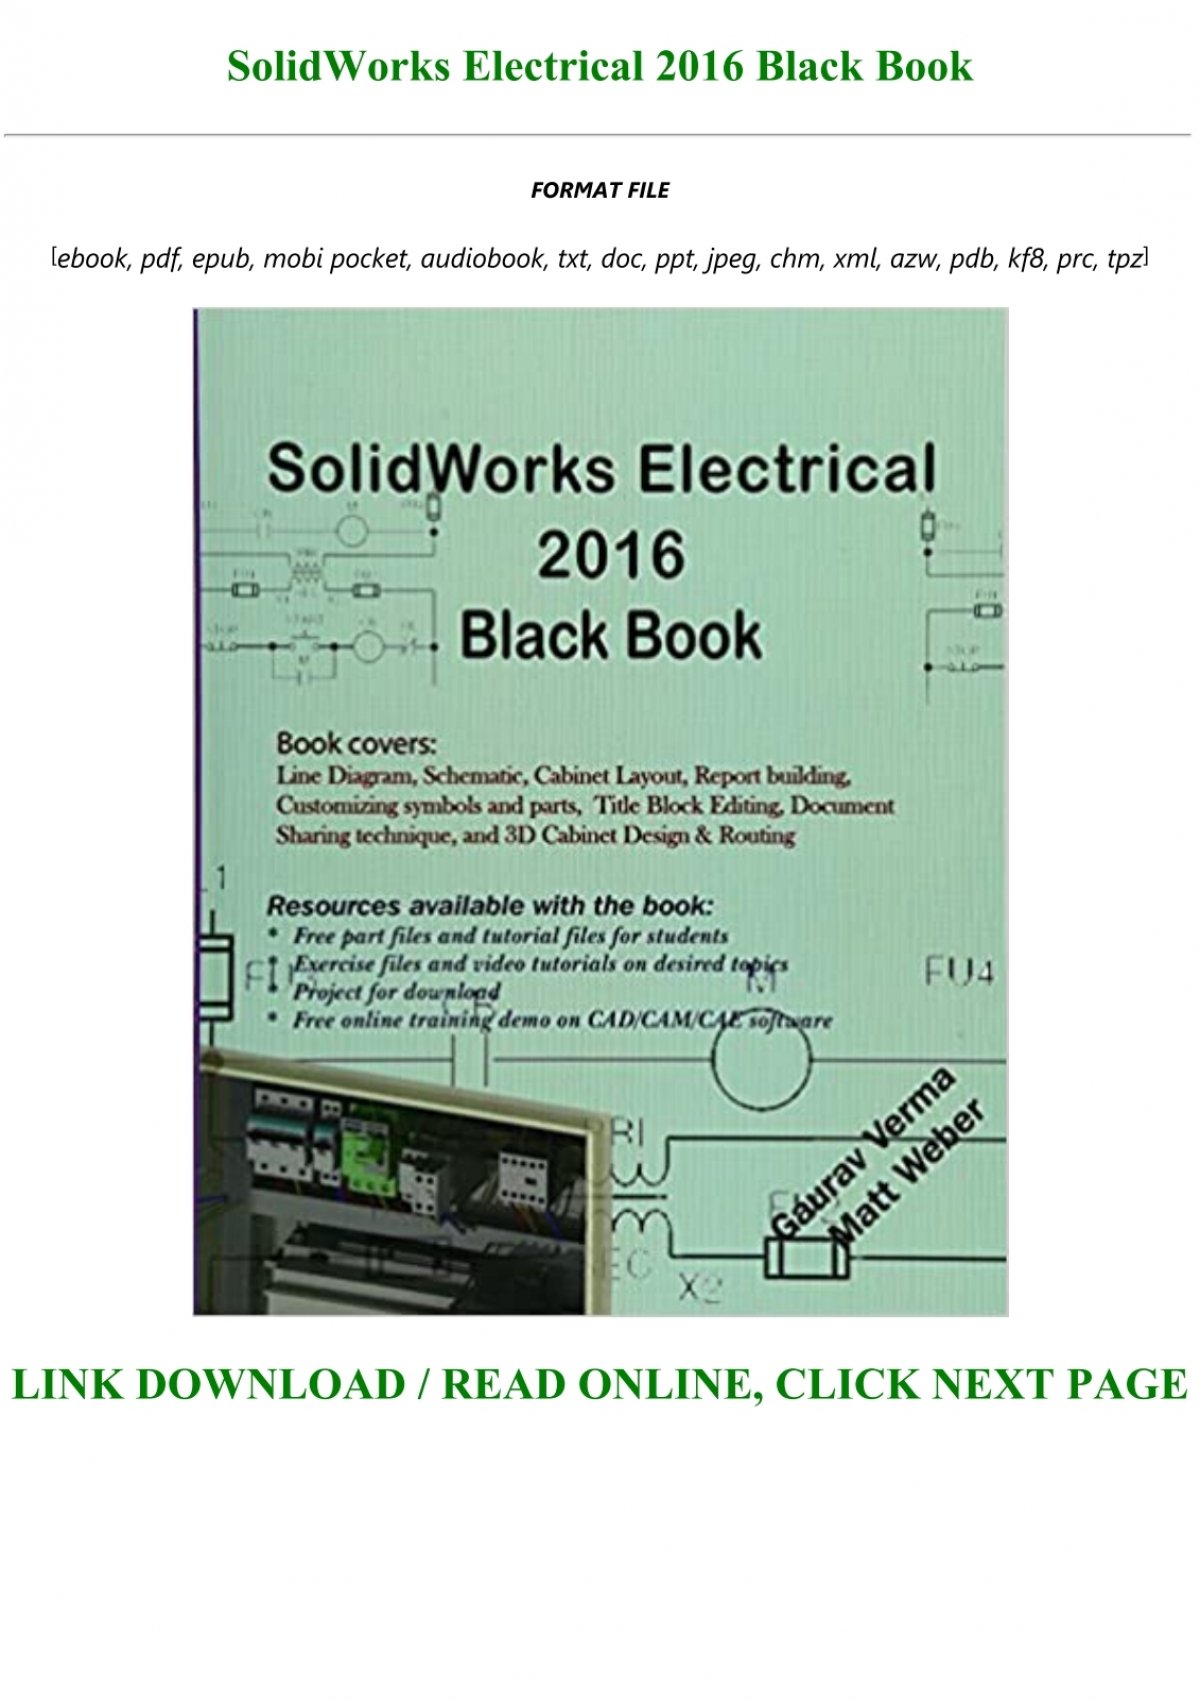 solidworks electrical black book download